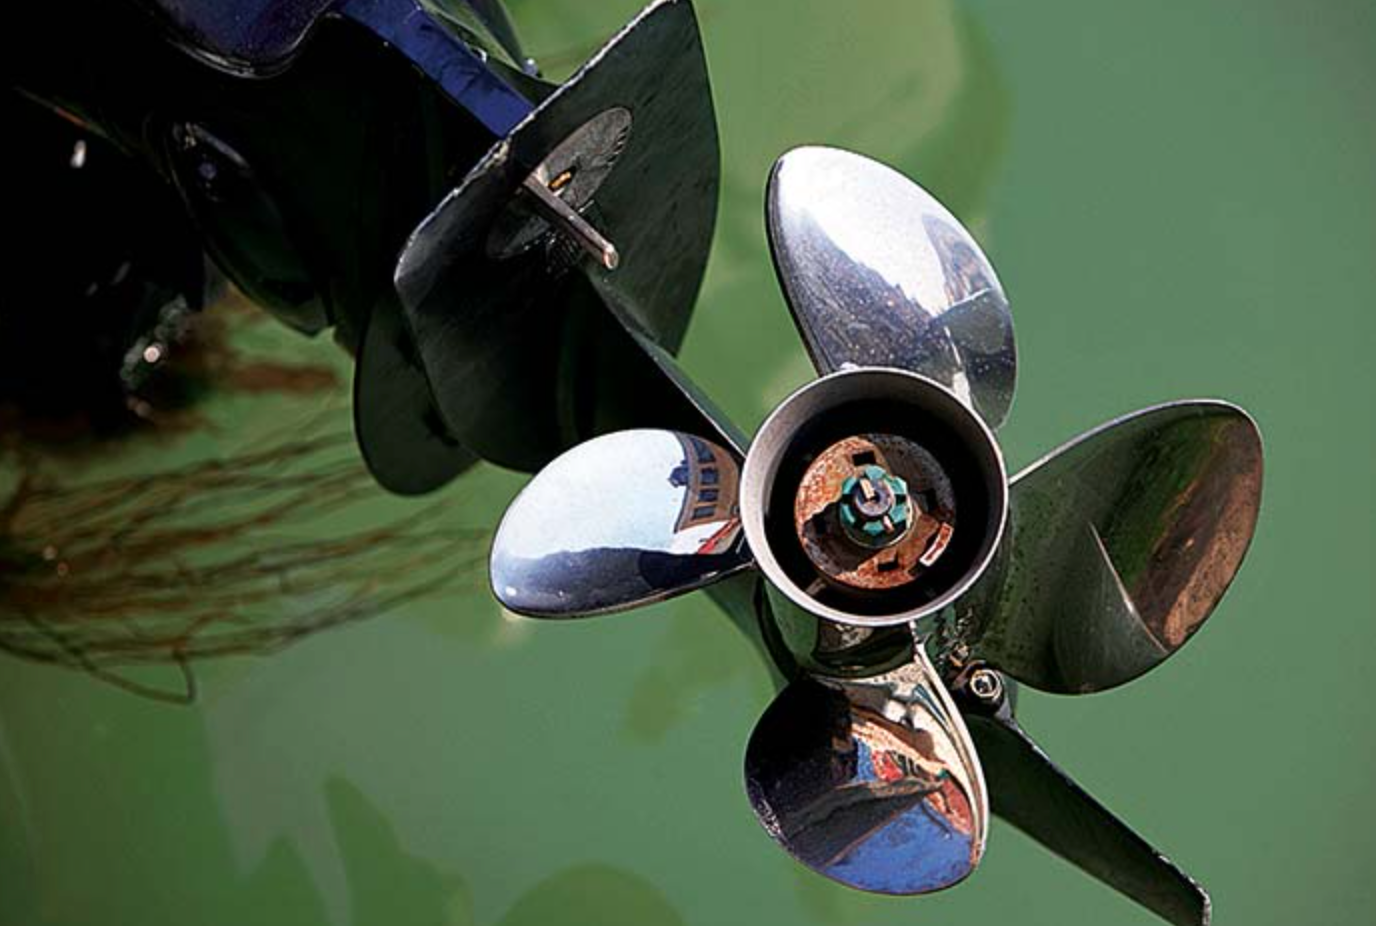 boat propeller, stainless-steel prop, installing a prop